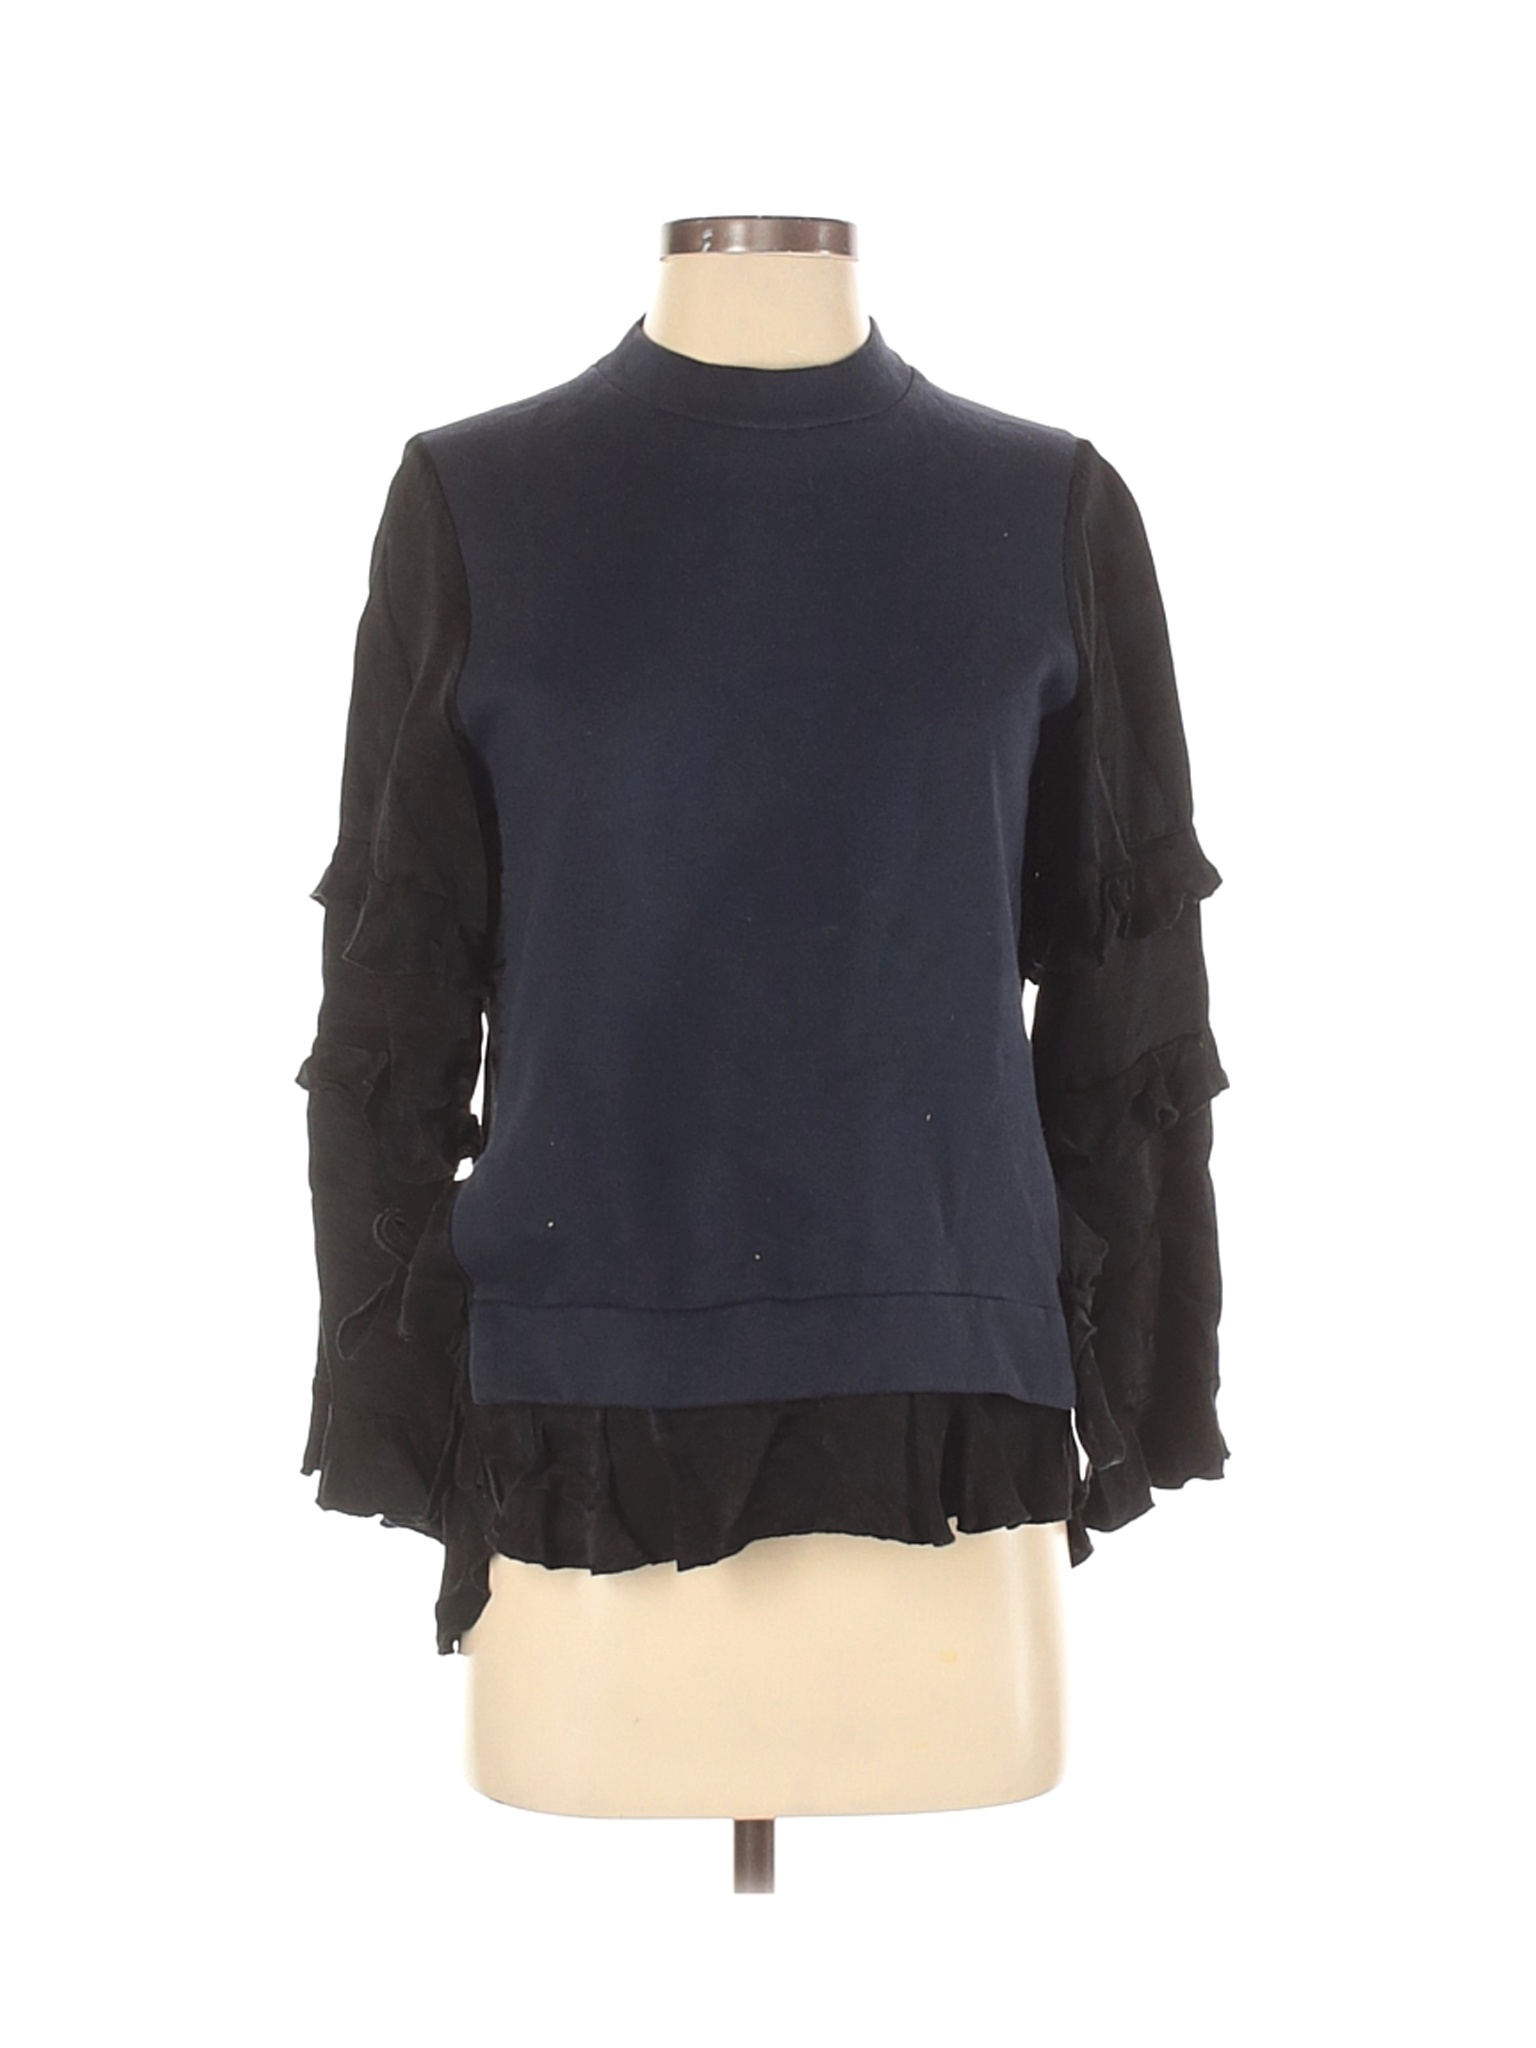 Zara Women Blue Long Sleeve Top XS | eBay